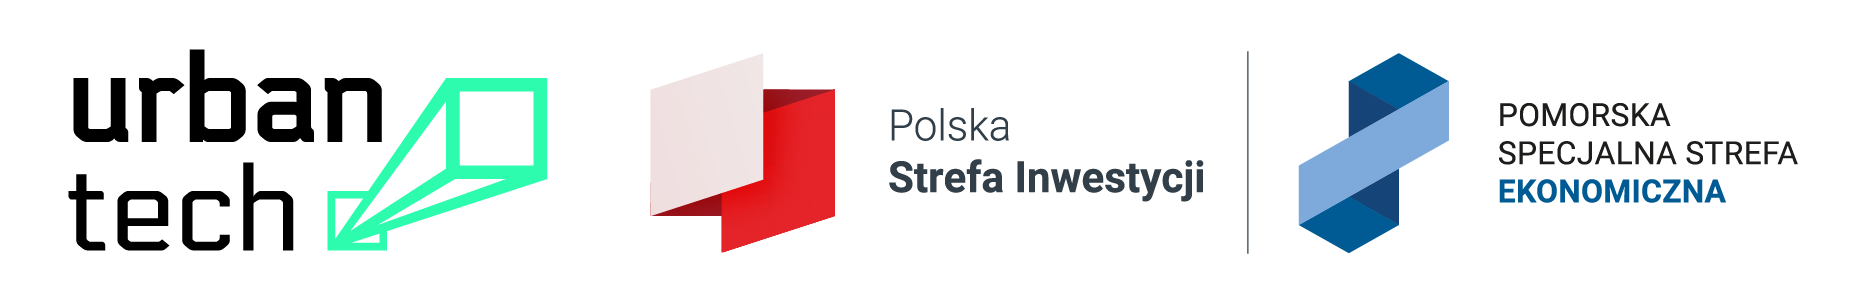 urban tech - polska strefa inwestycji - pomorska specjalna strefa ekonomiczna - logo